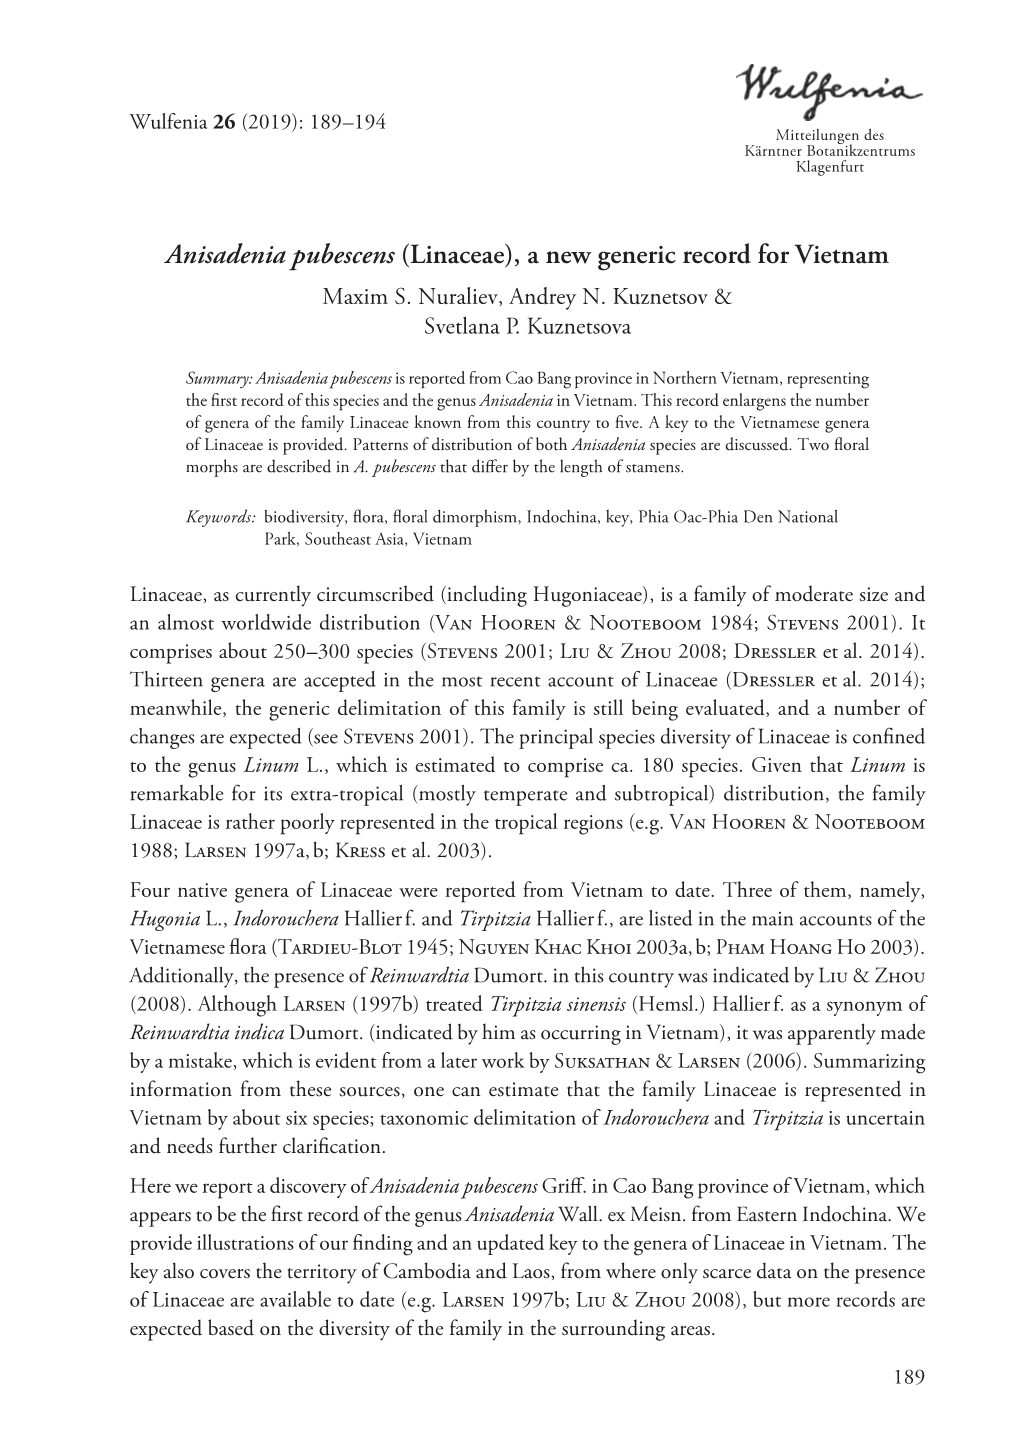 Anisadenia Pubescens (Linaceae), a New Generic Record for Vietnam Maxim S